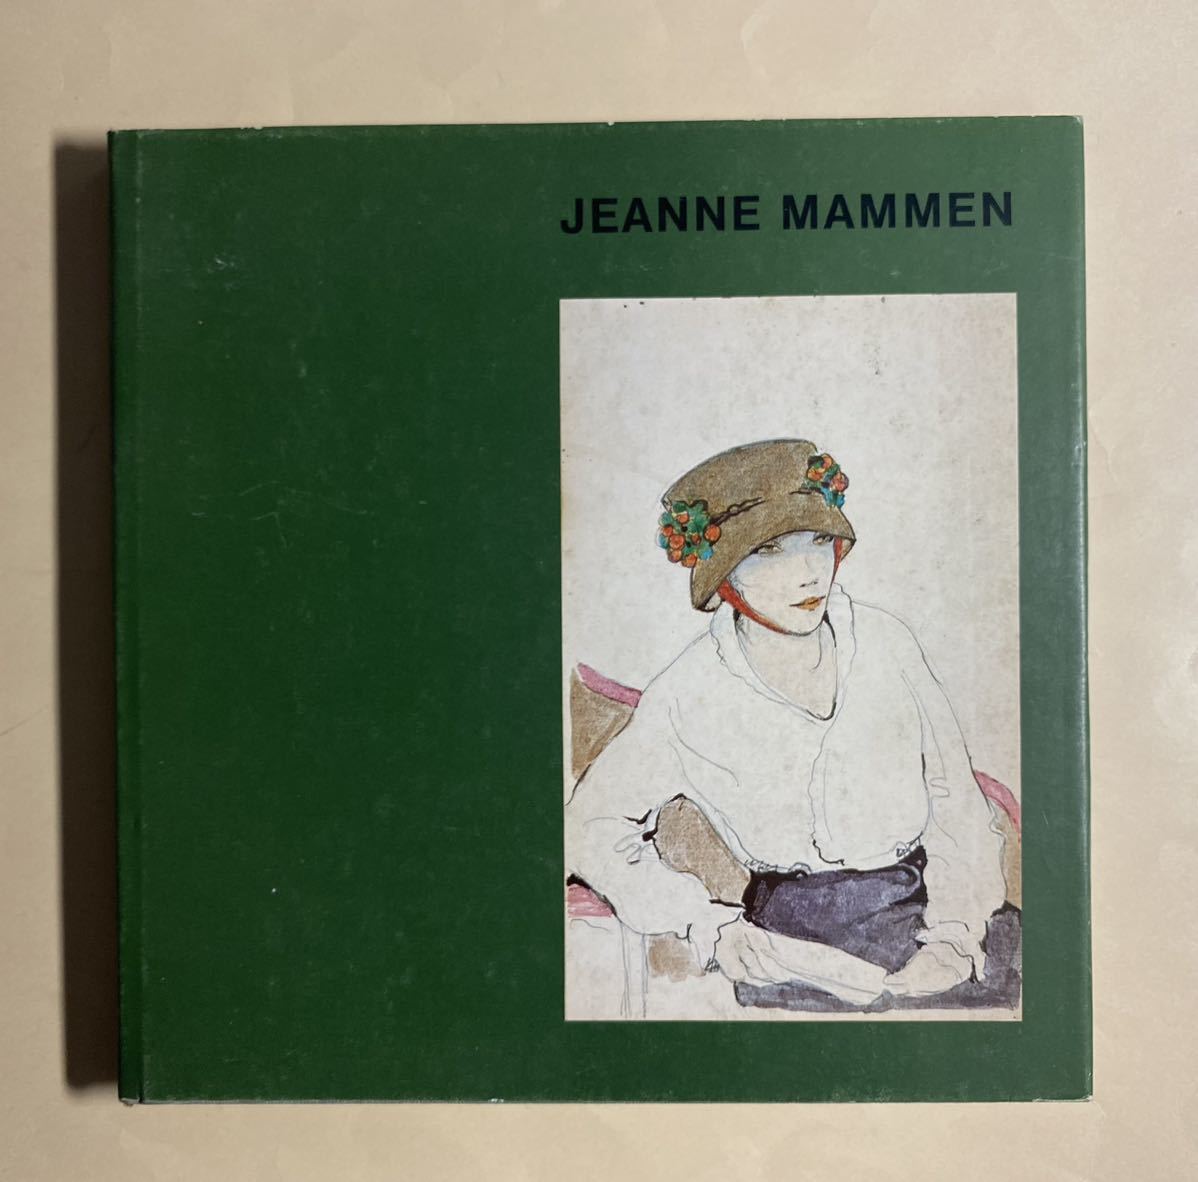  German only Jean n*ma men wai Maar Berlin book of paintings in print Jeanne Mammen 158P 1978 year Edition Cantz